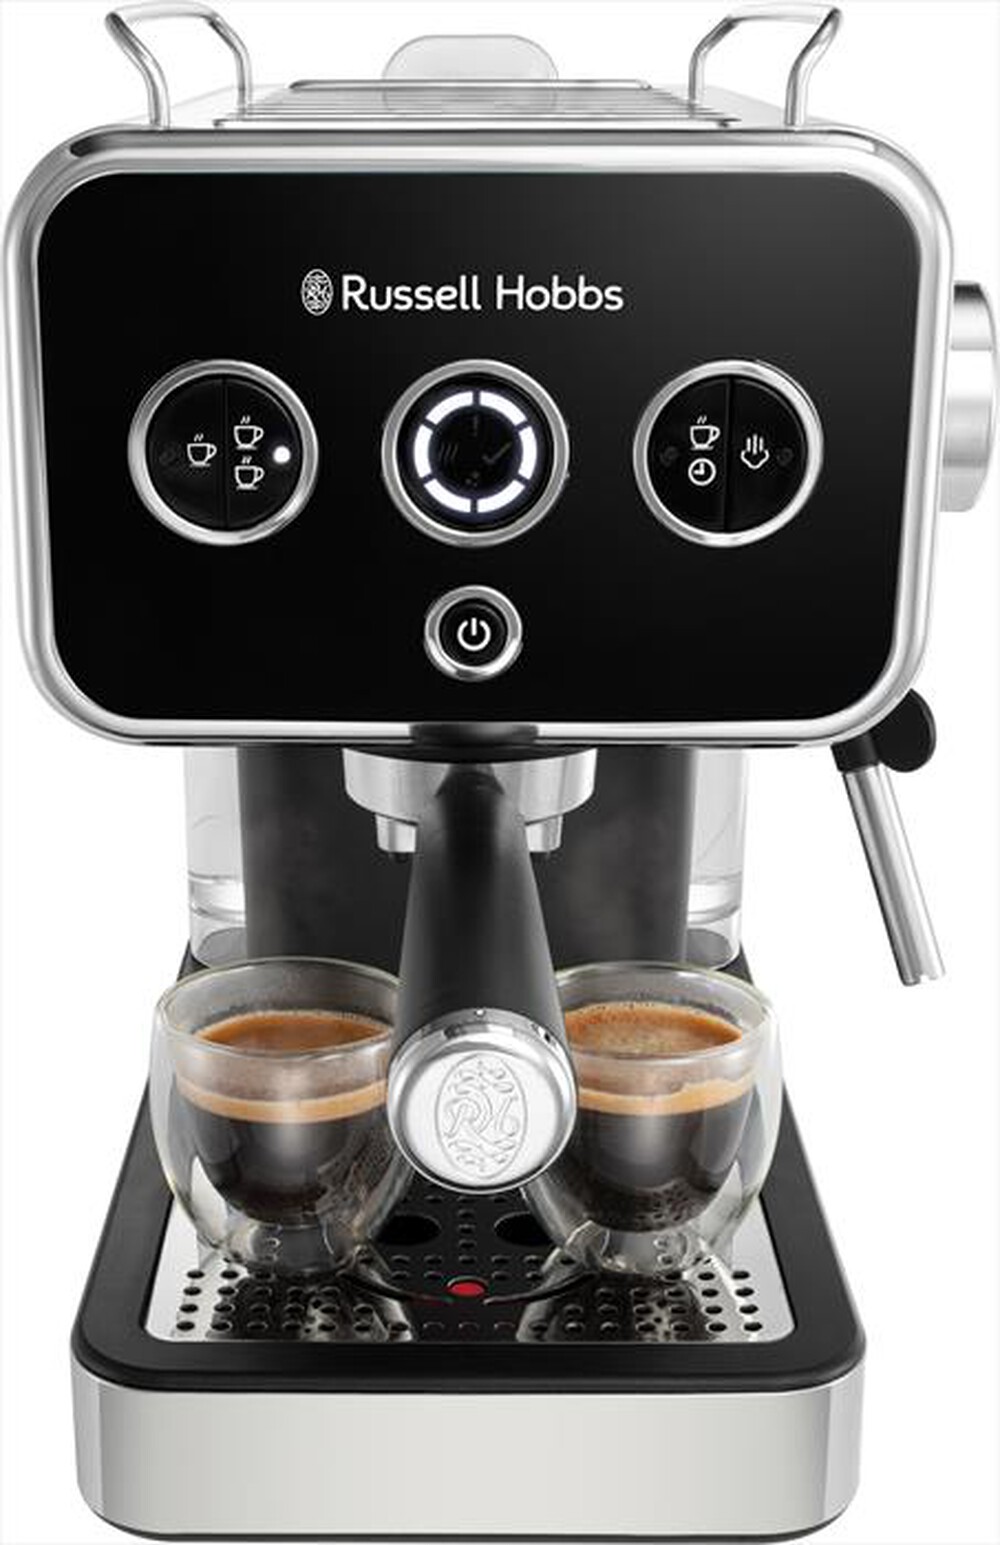 "RUSSELL HOBBS - Macchina da caffè espresso 26450-56-nero"